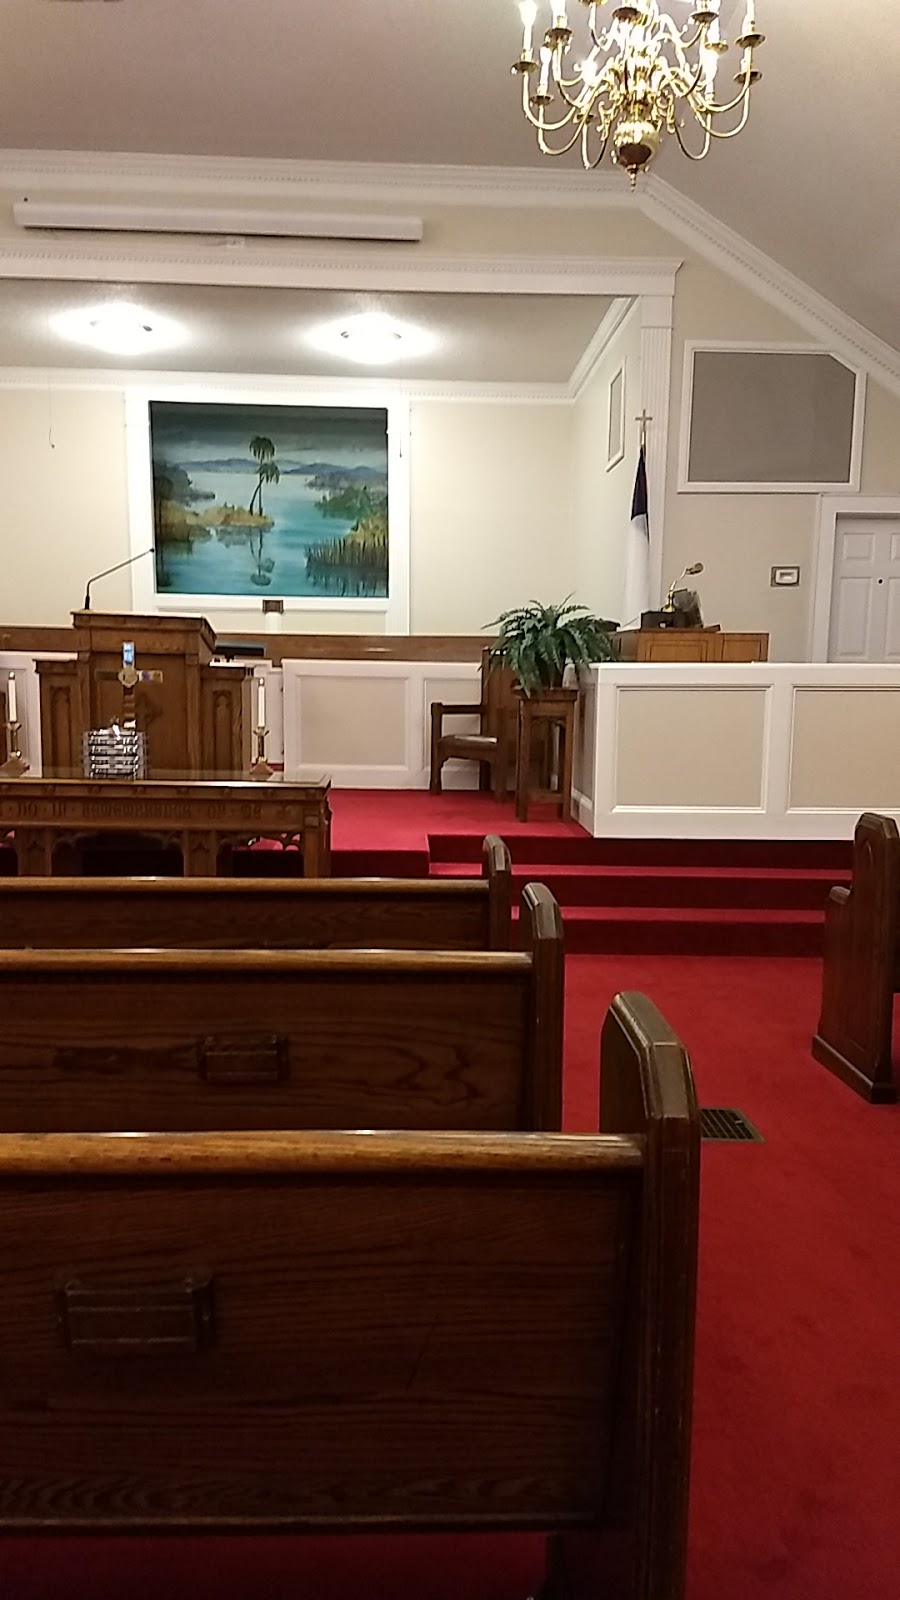 Flat Rock Baptist Church - church  | Photo 2 of 3 | Address: 1529 Flat Rock Church Rd, Louisburg, NC 27549, USA | Phone: (919) 556-1622